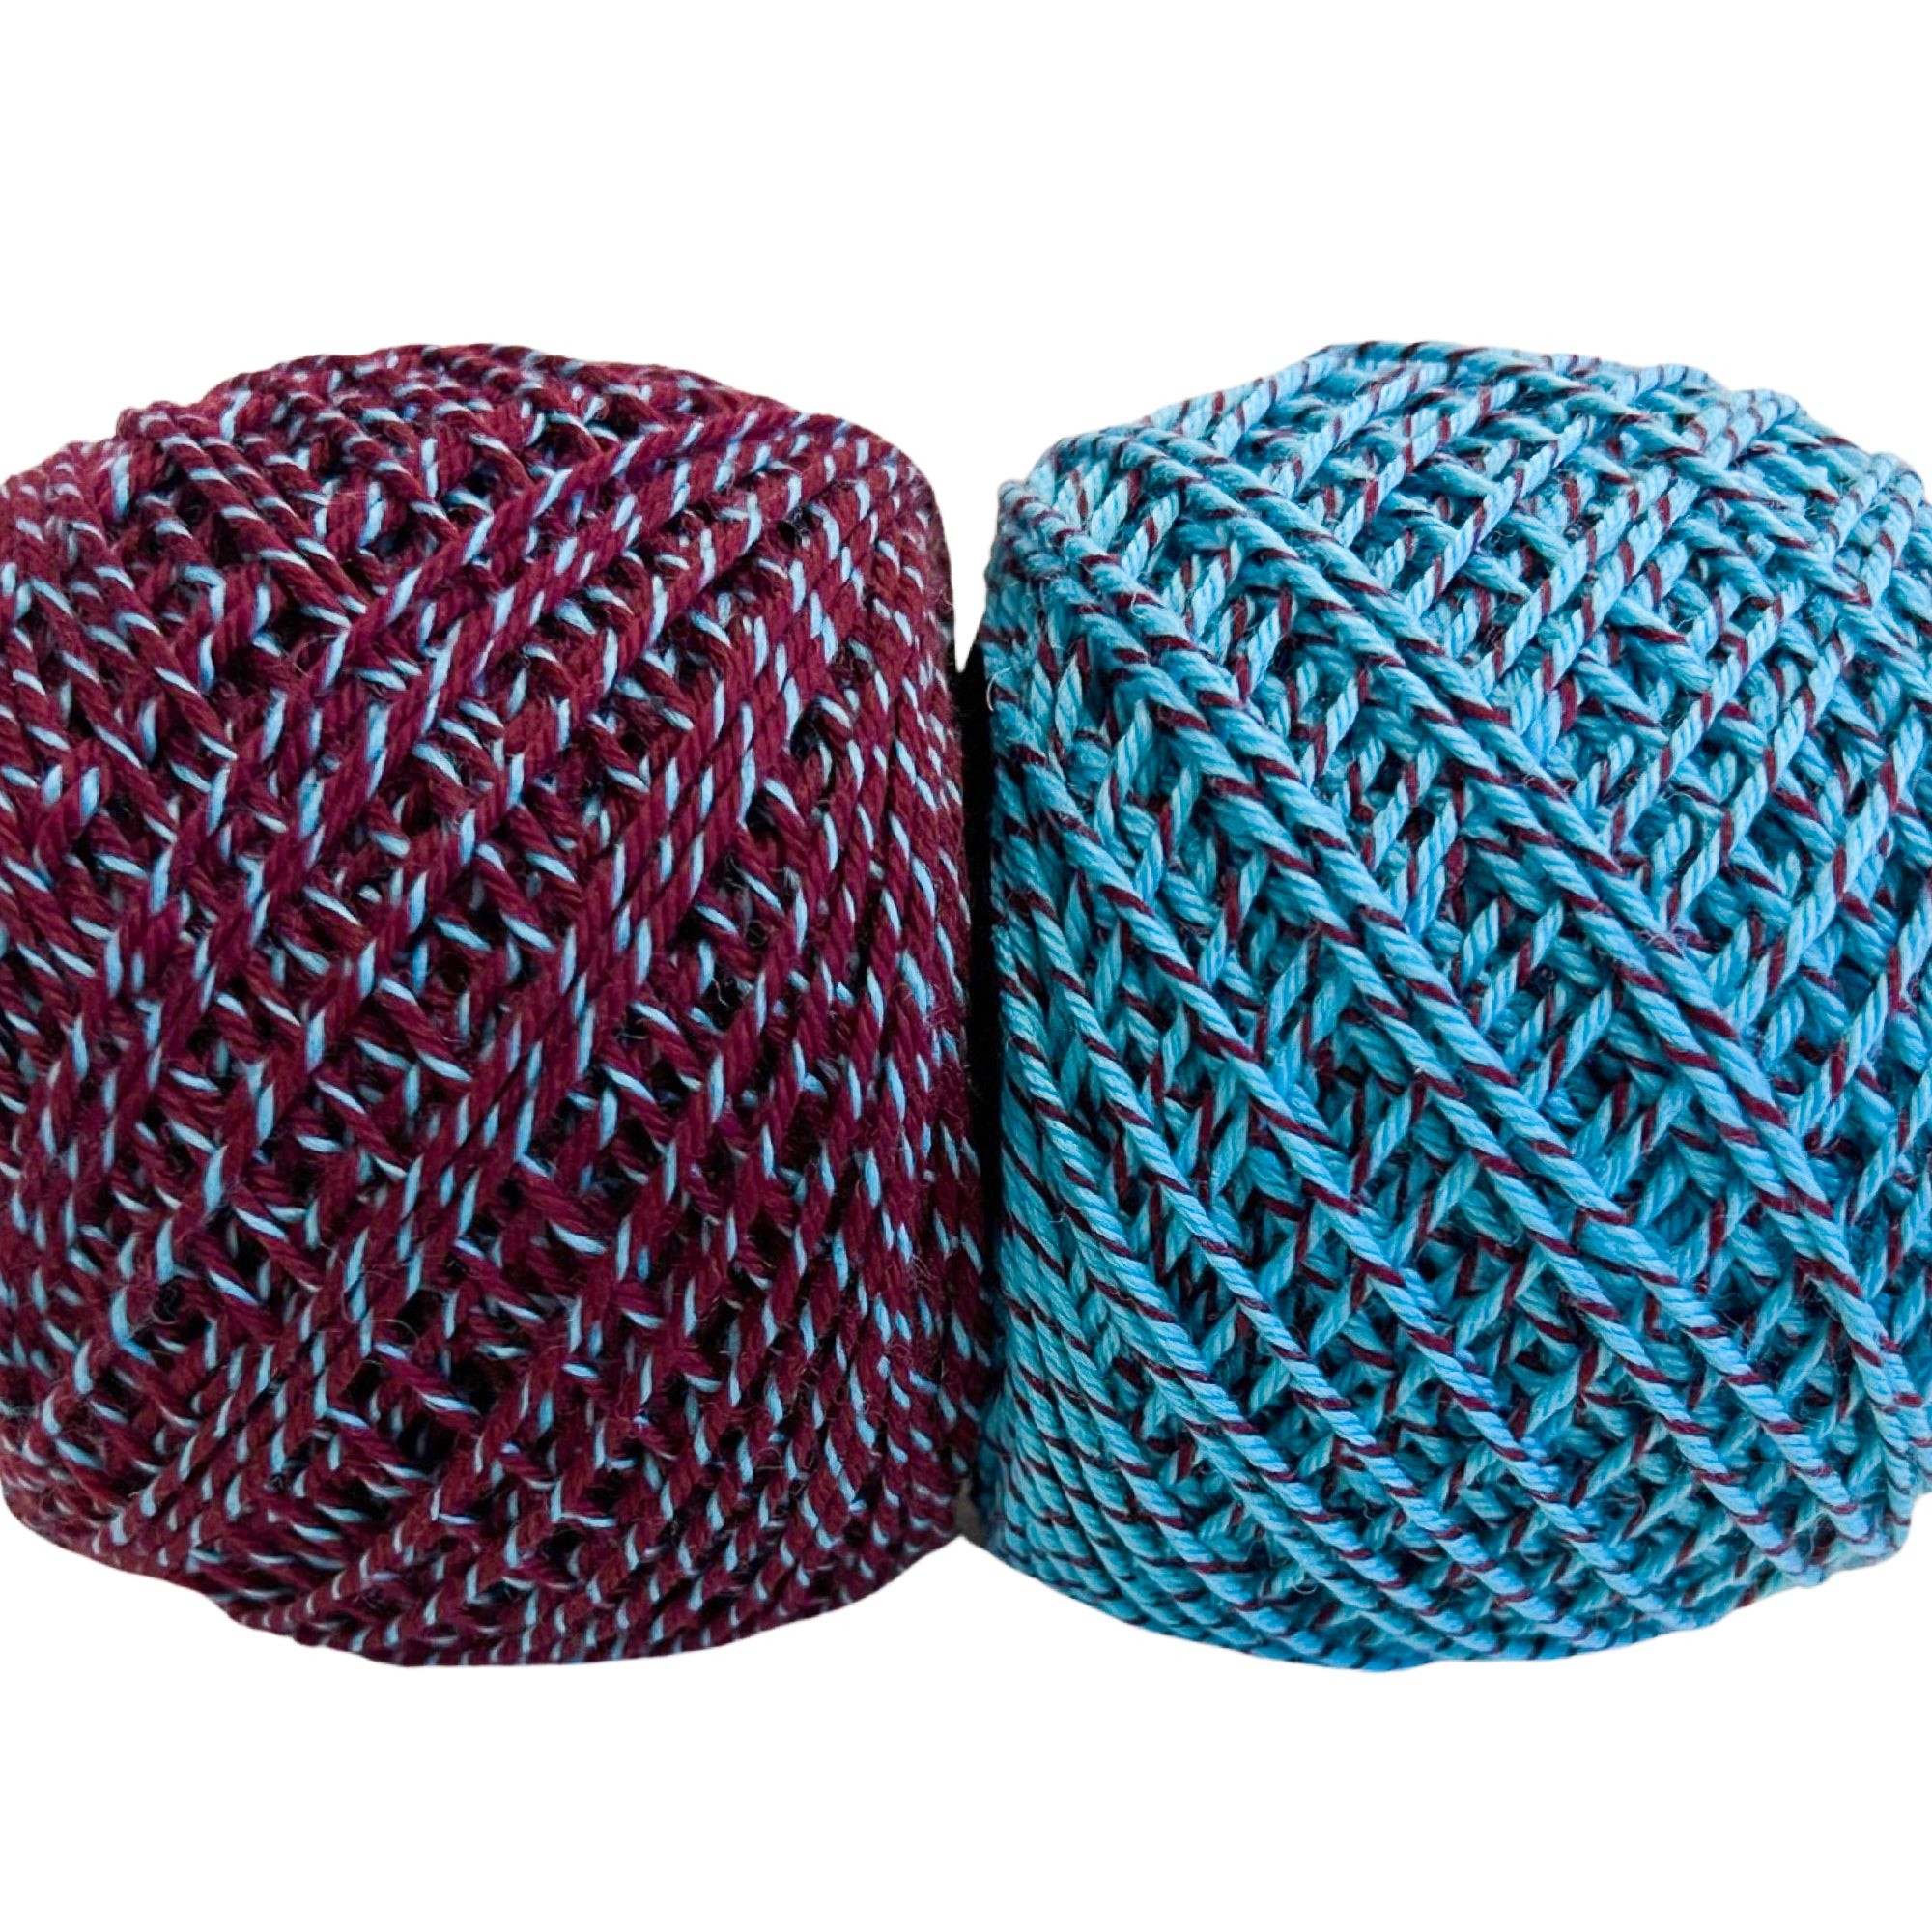 Buy loops yarn Online in KUWAIT at Low Prices at desertcart